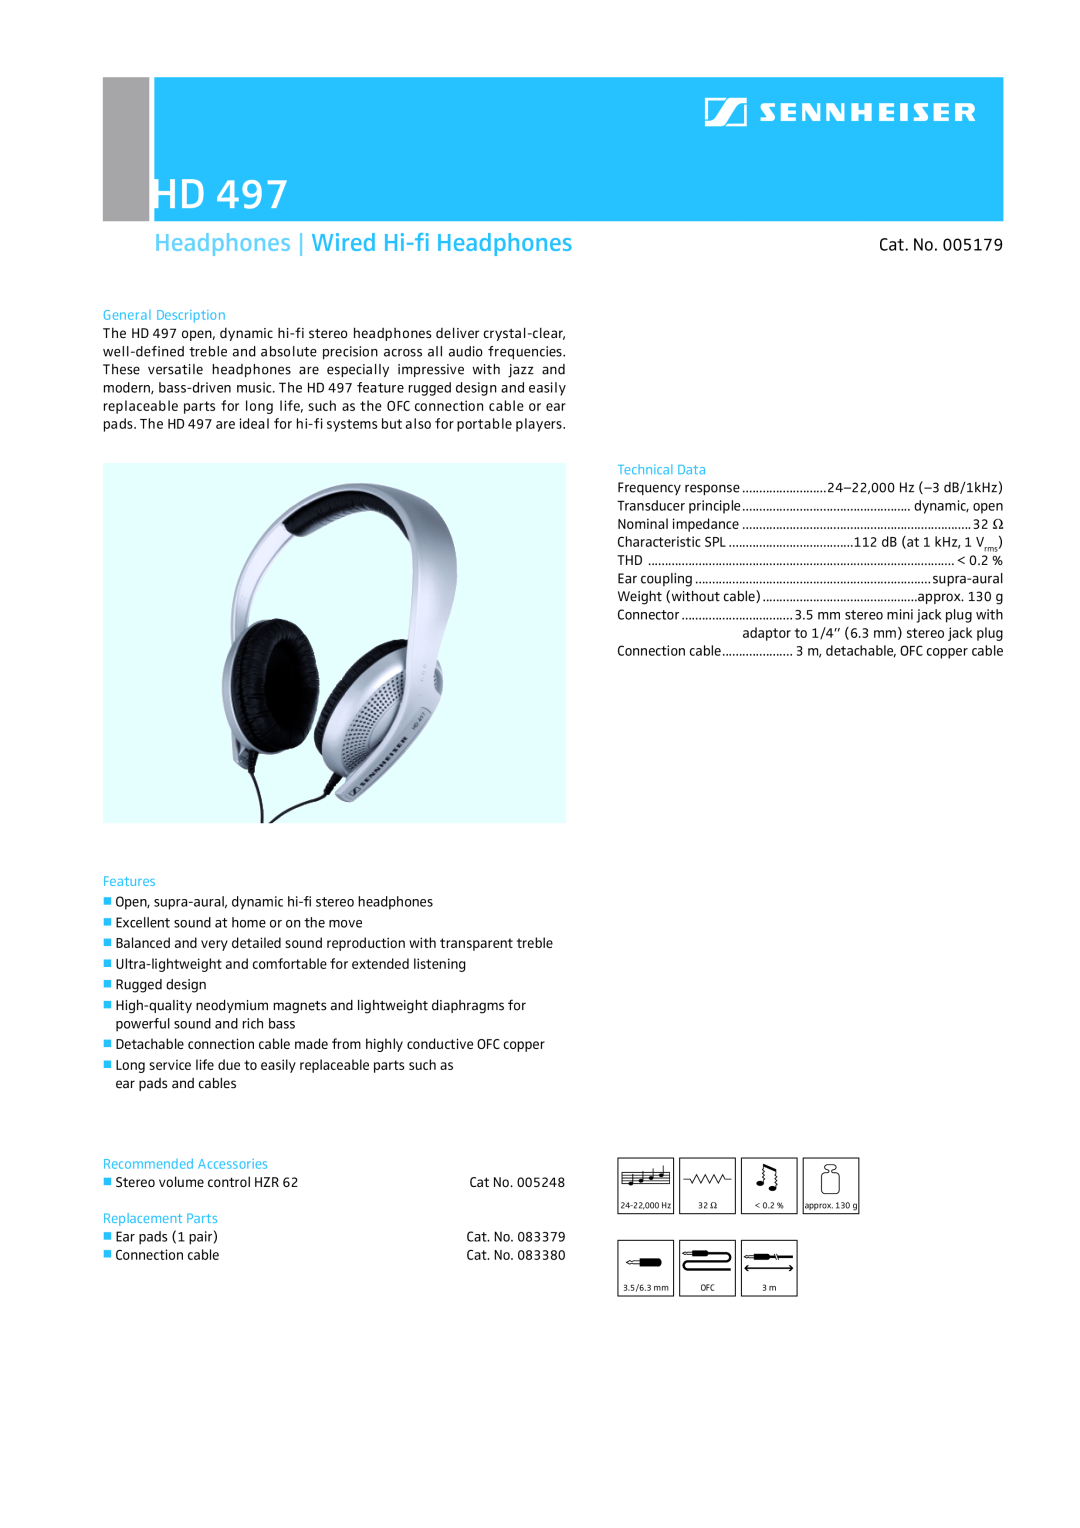 Sennheiser HD 497 manual Headphones Wired Hi-ﬁHeadphones, Cat. No, General Description, Features, Technical Data 